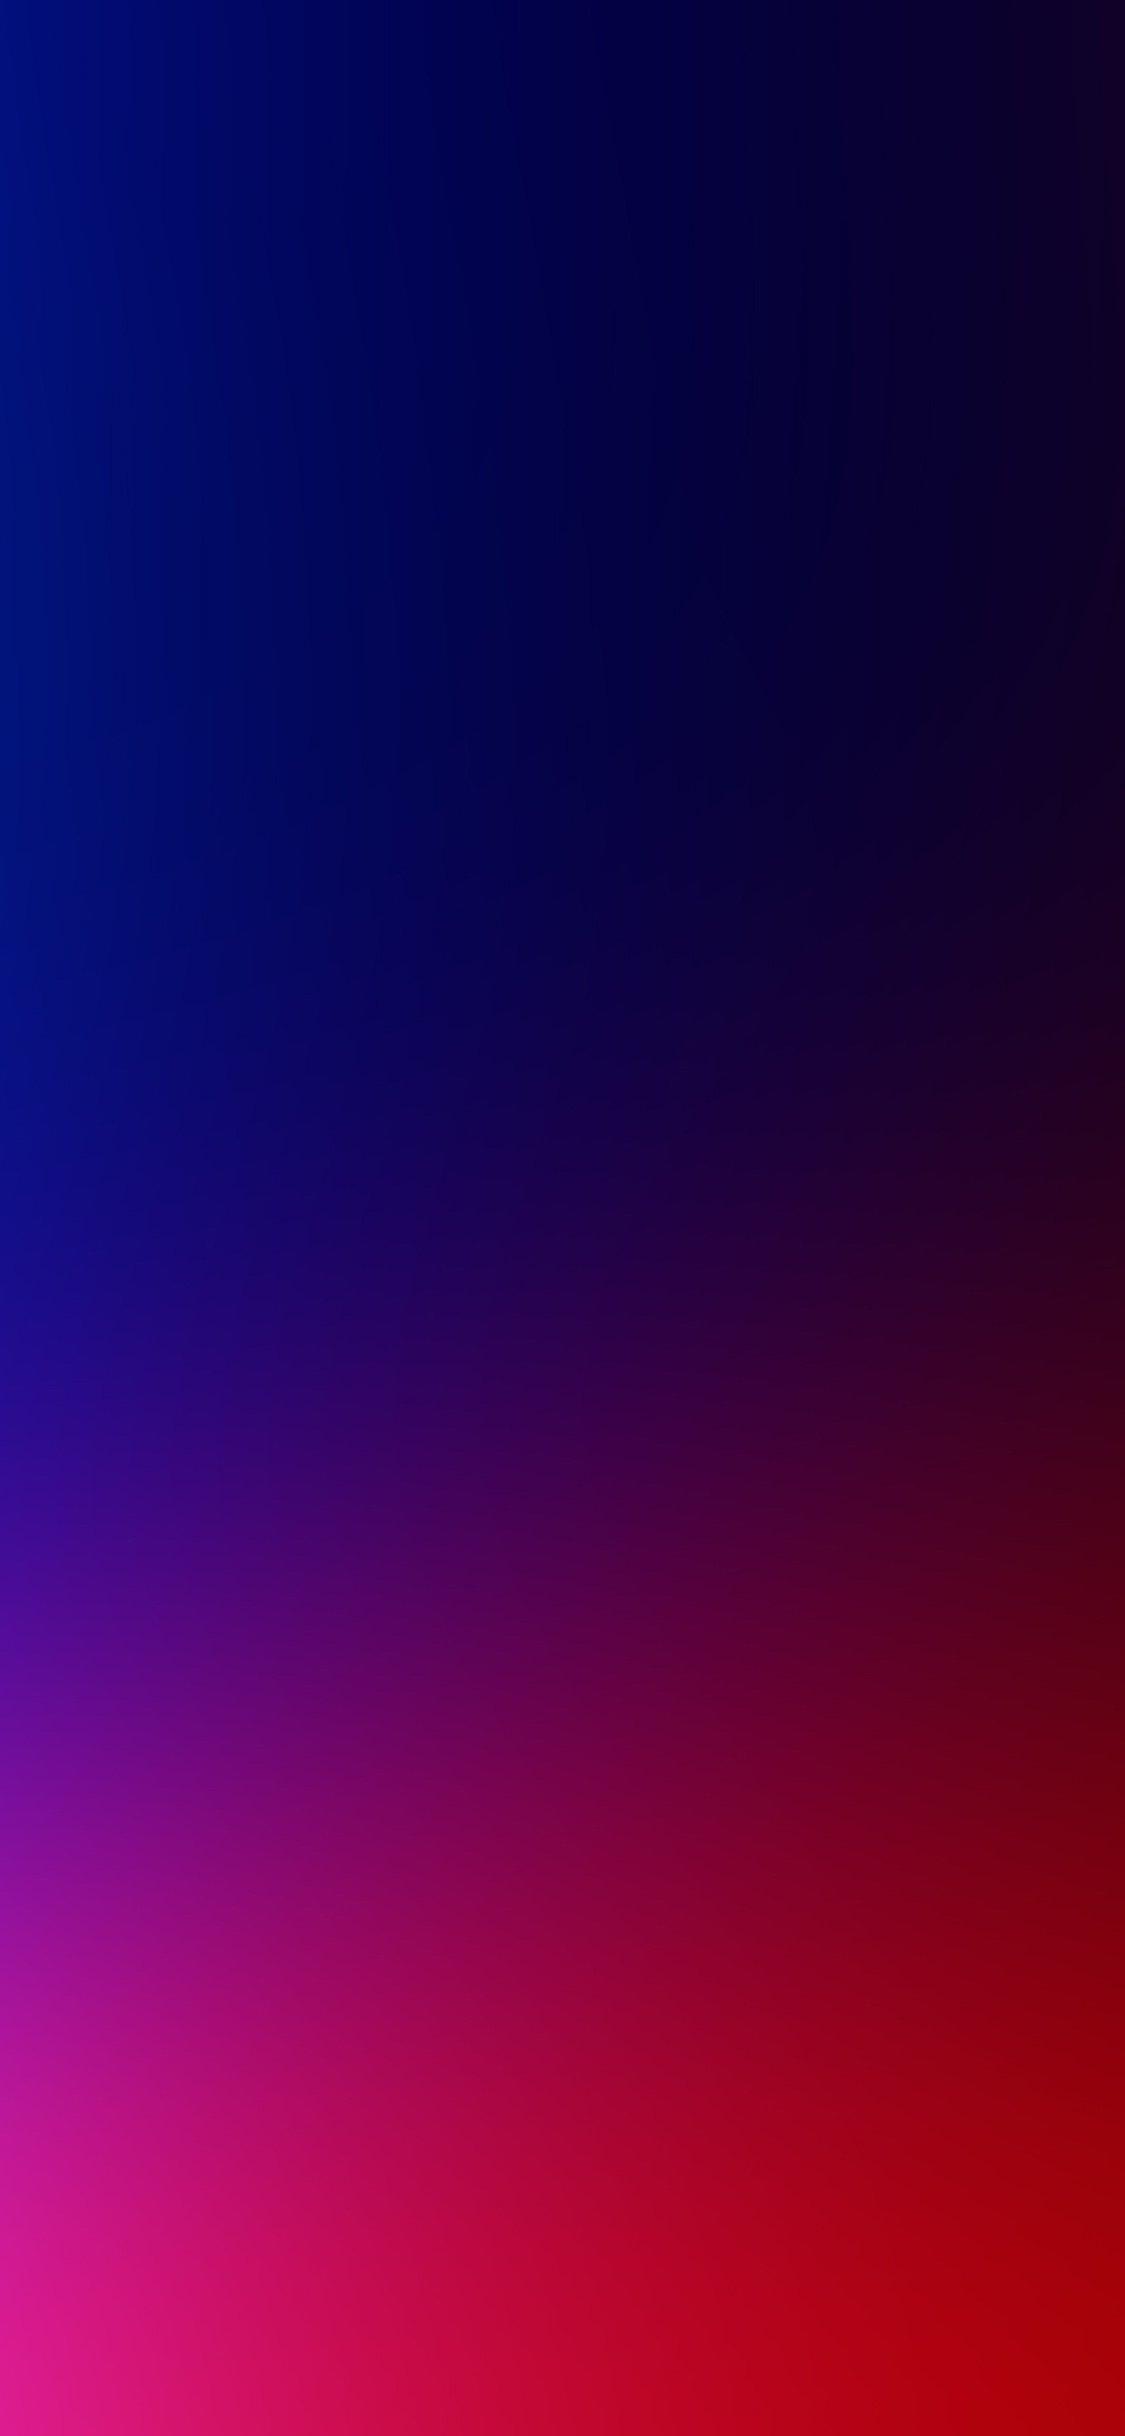 iPhone 8 wallpaper. blue red blur night